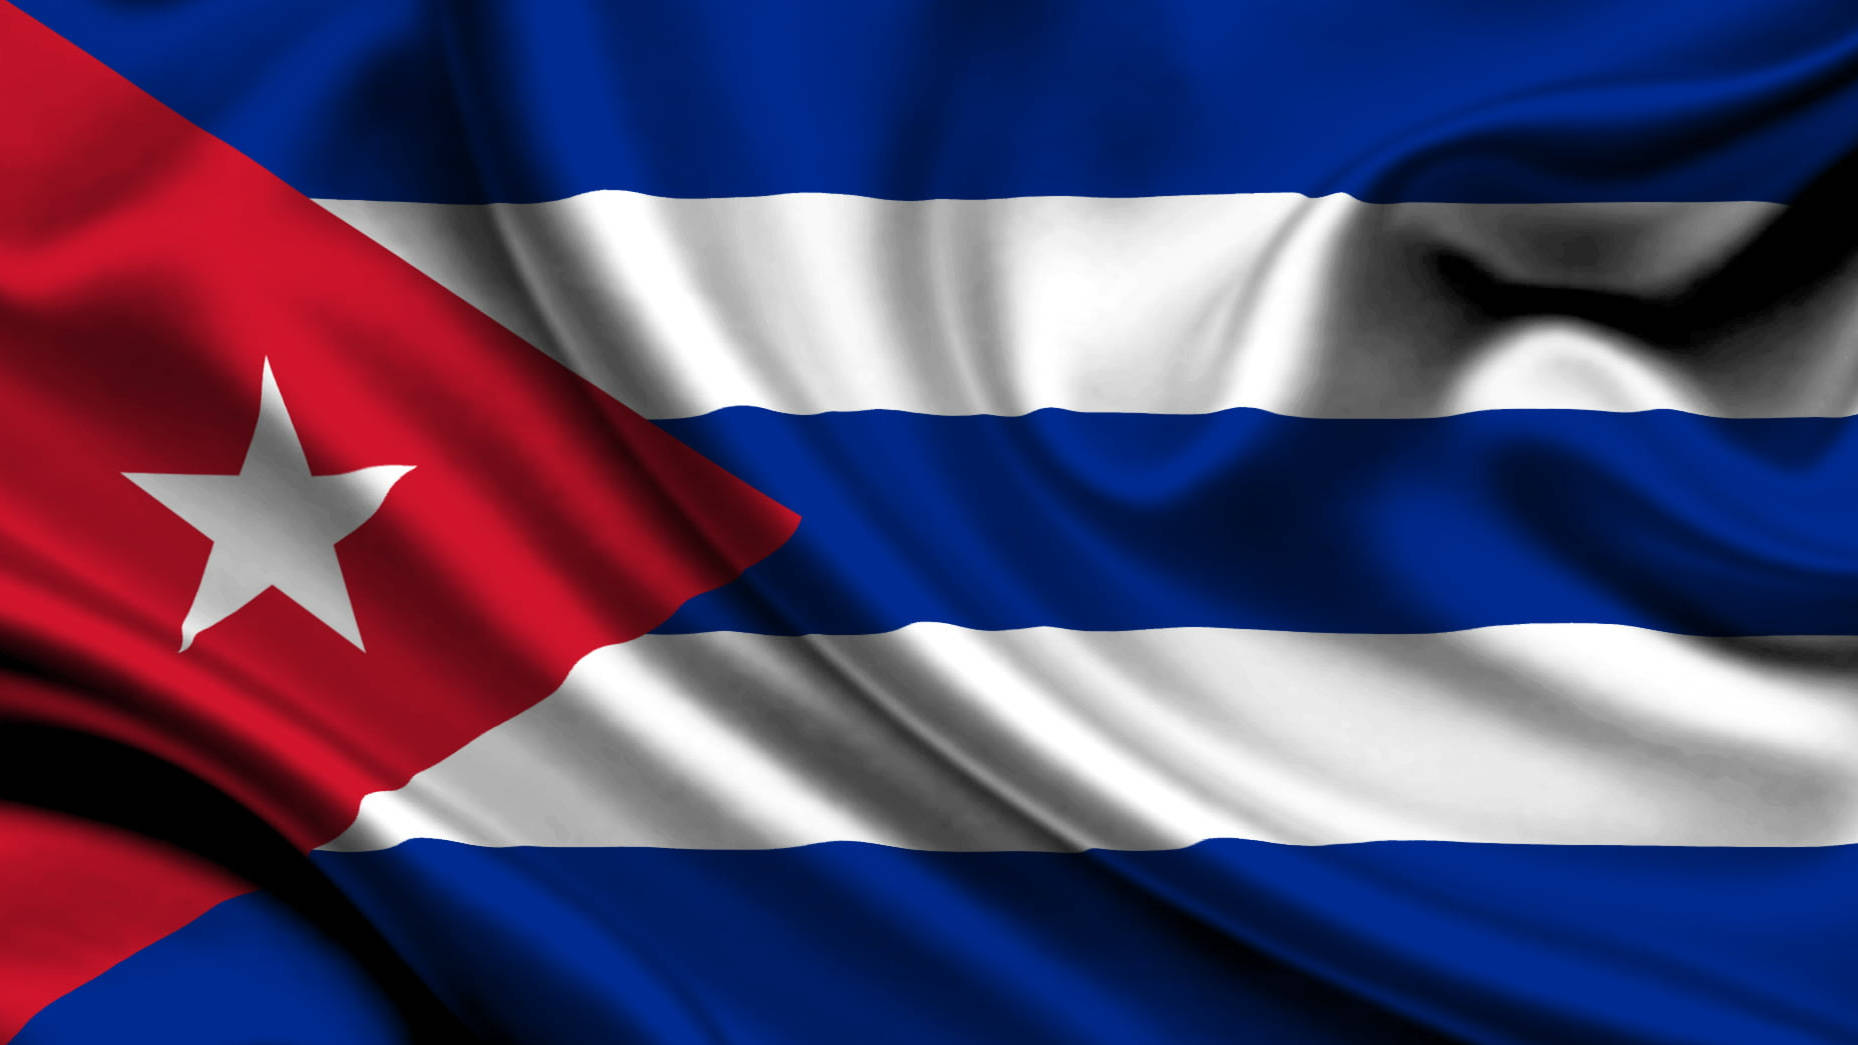 Cuban Flag Satin Texture Background